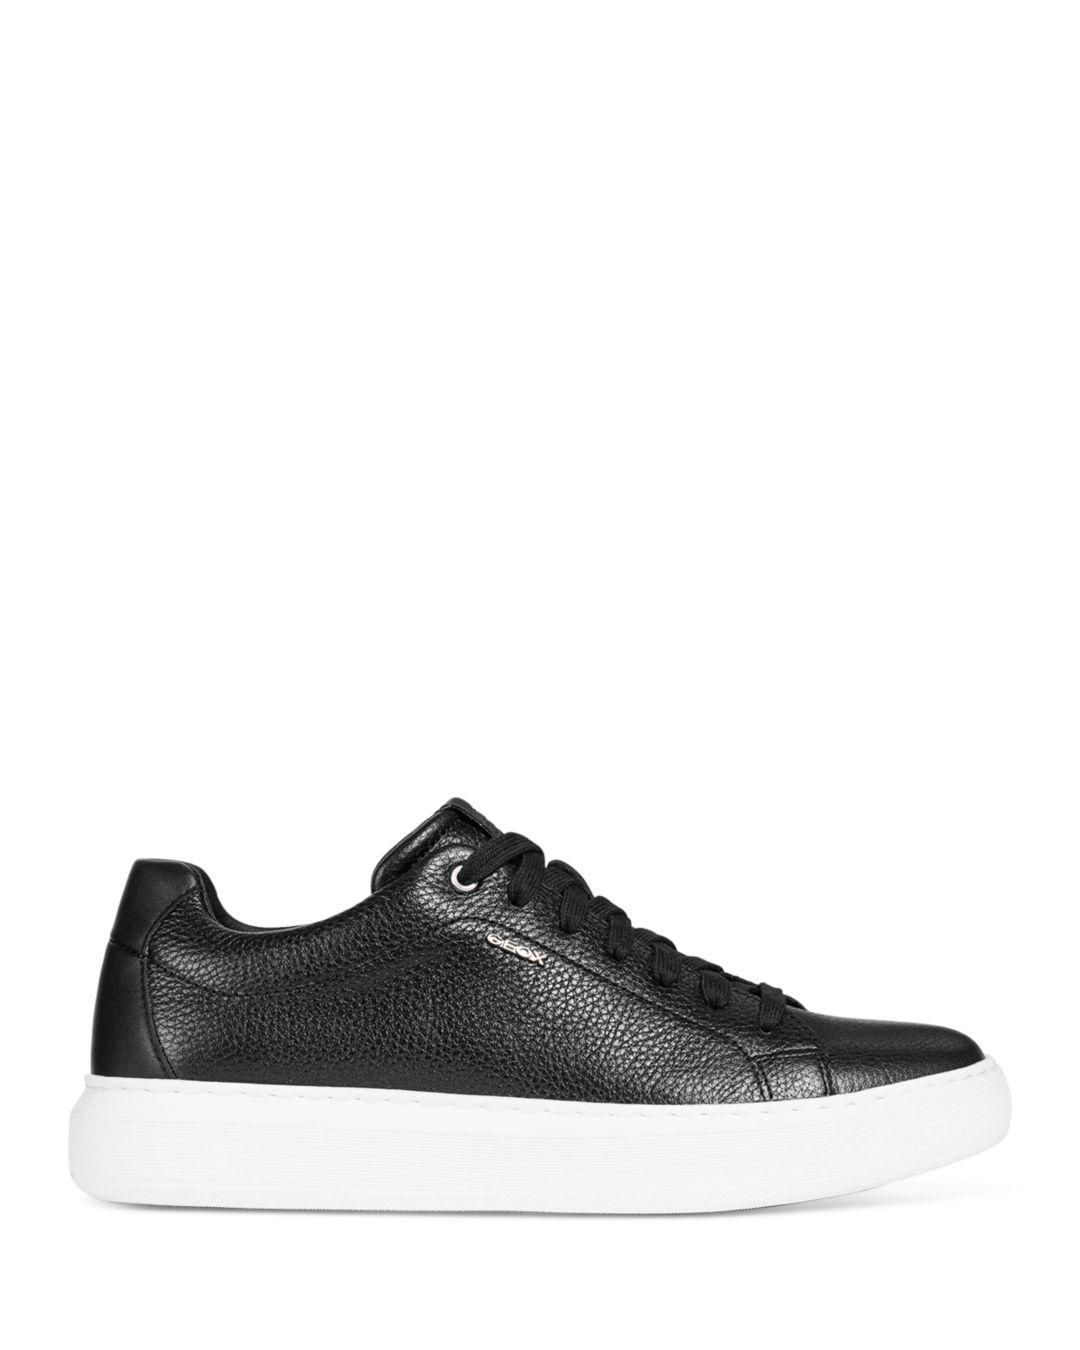 Geox Deiven Leather Sneakers in Black for Men - Lyst